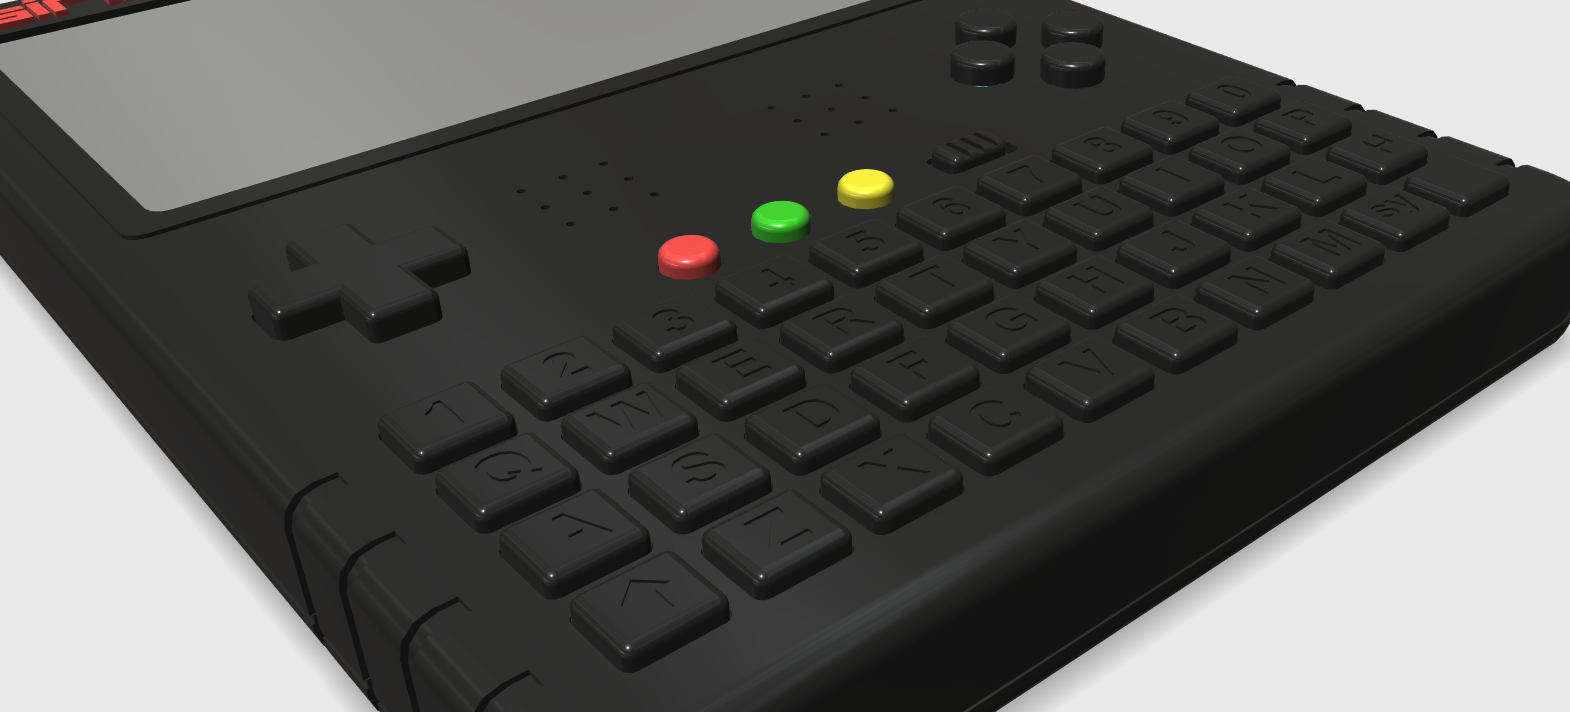 ZX Spectrum Next Handheld Design 3